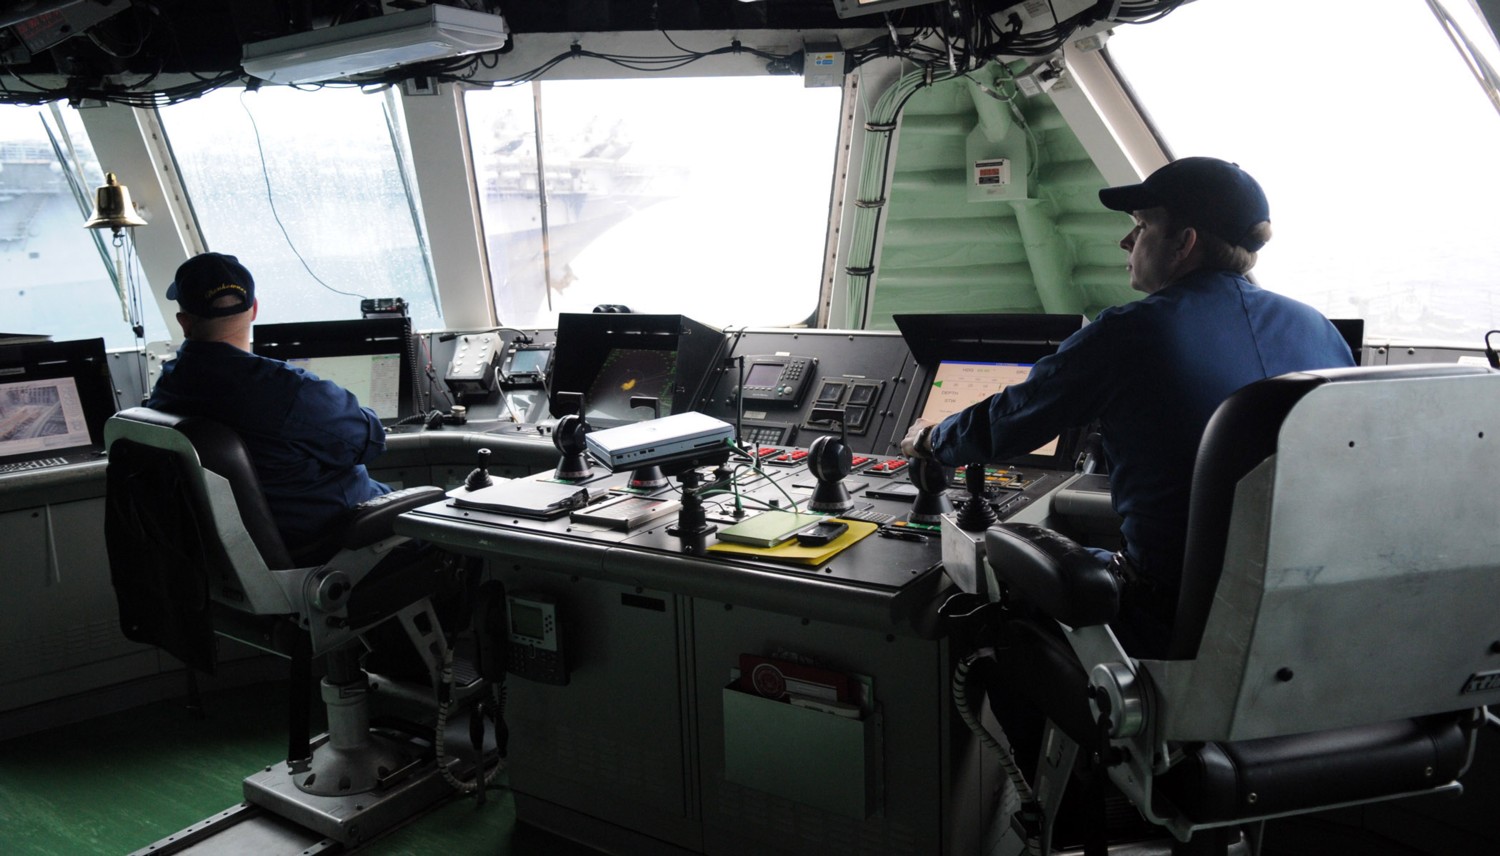 lcs-1 uss freedom class littoral combat ship us navy 69 bridge helm cockpit